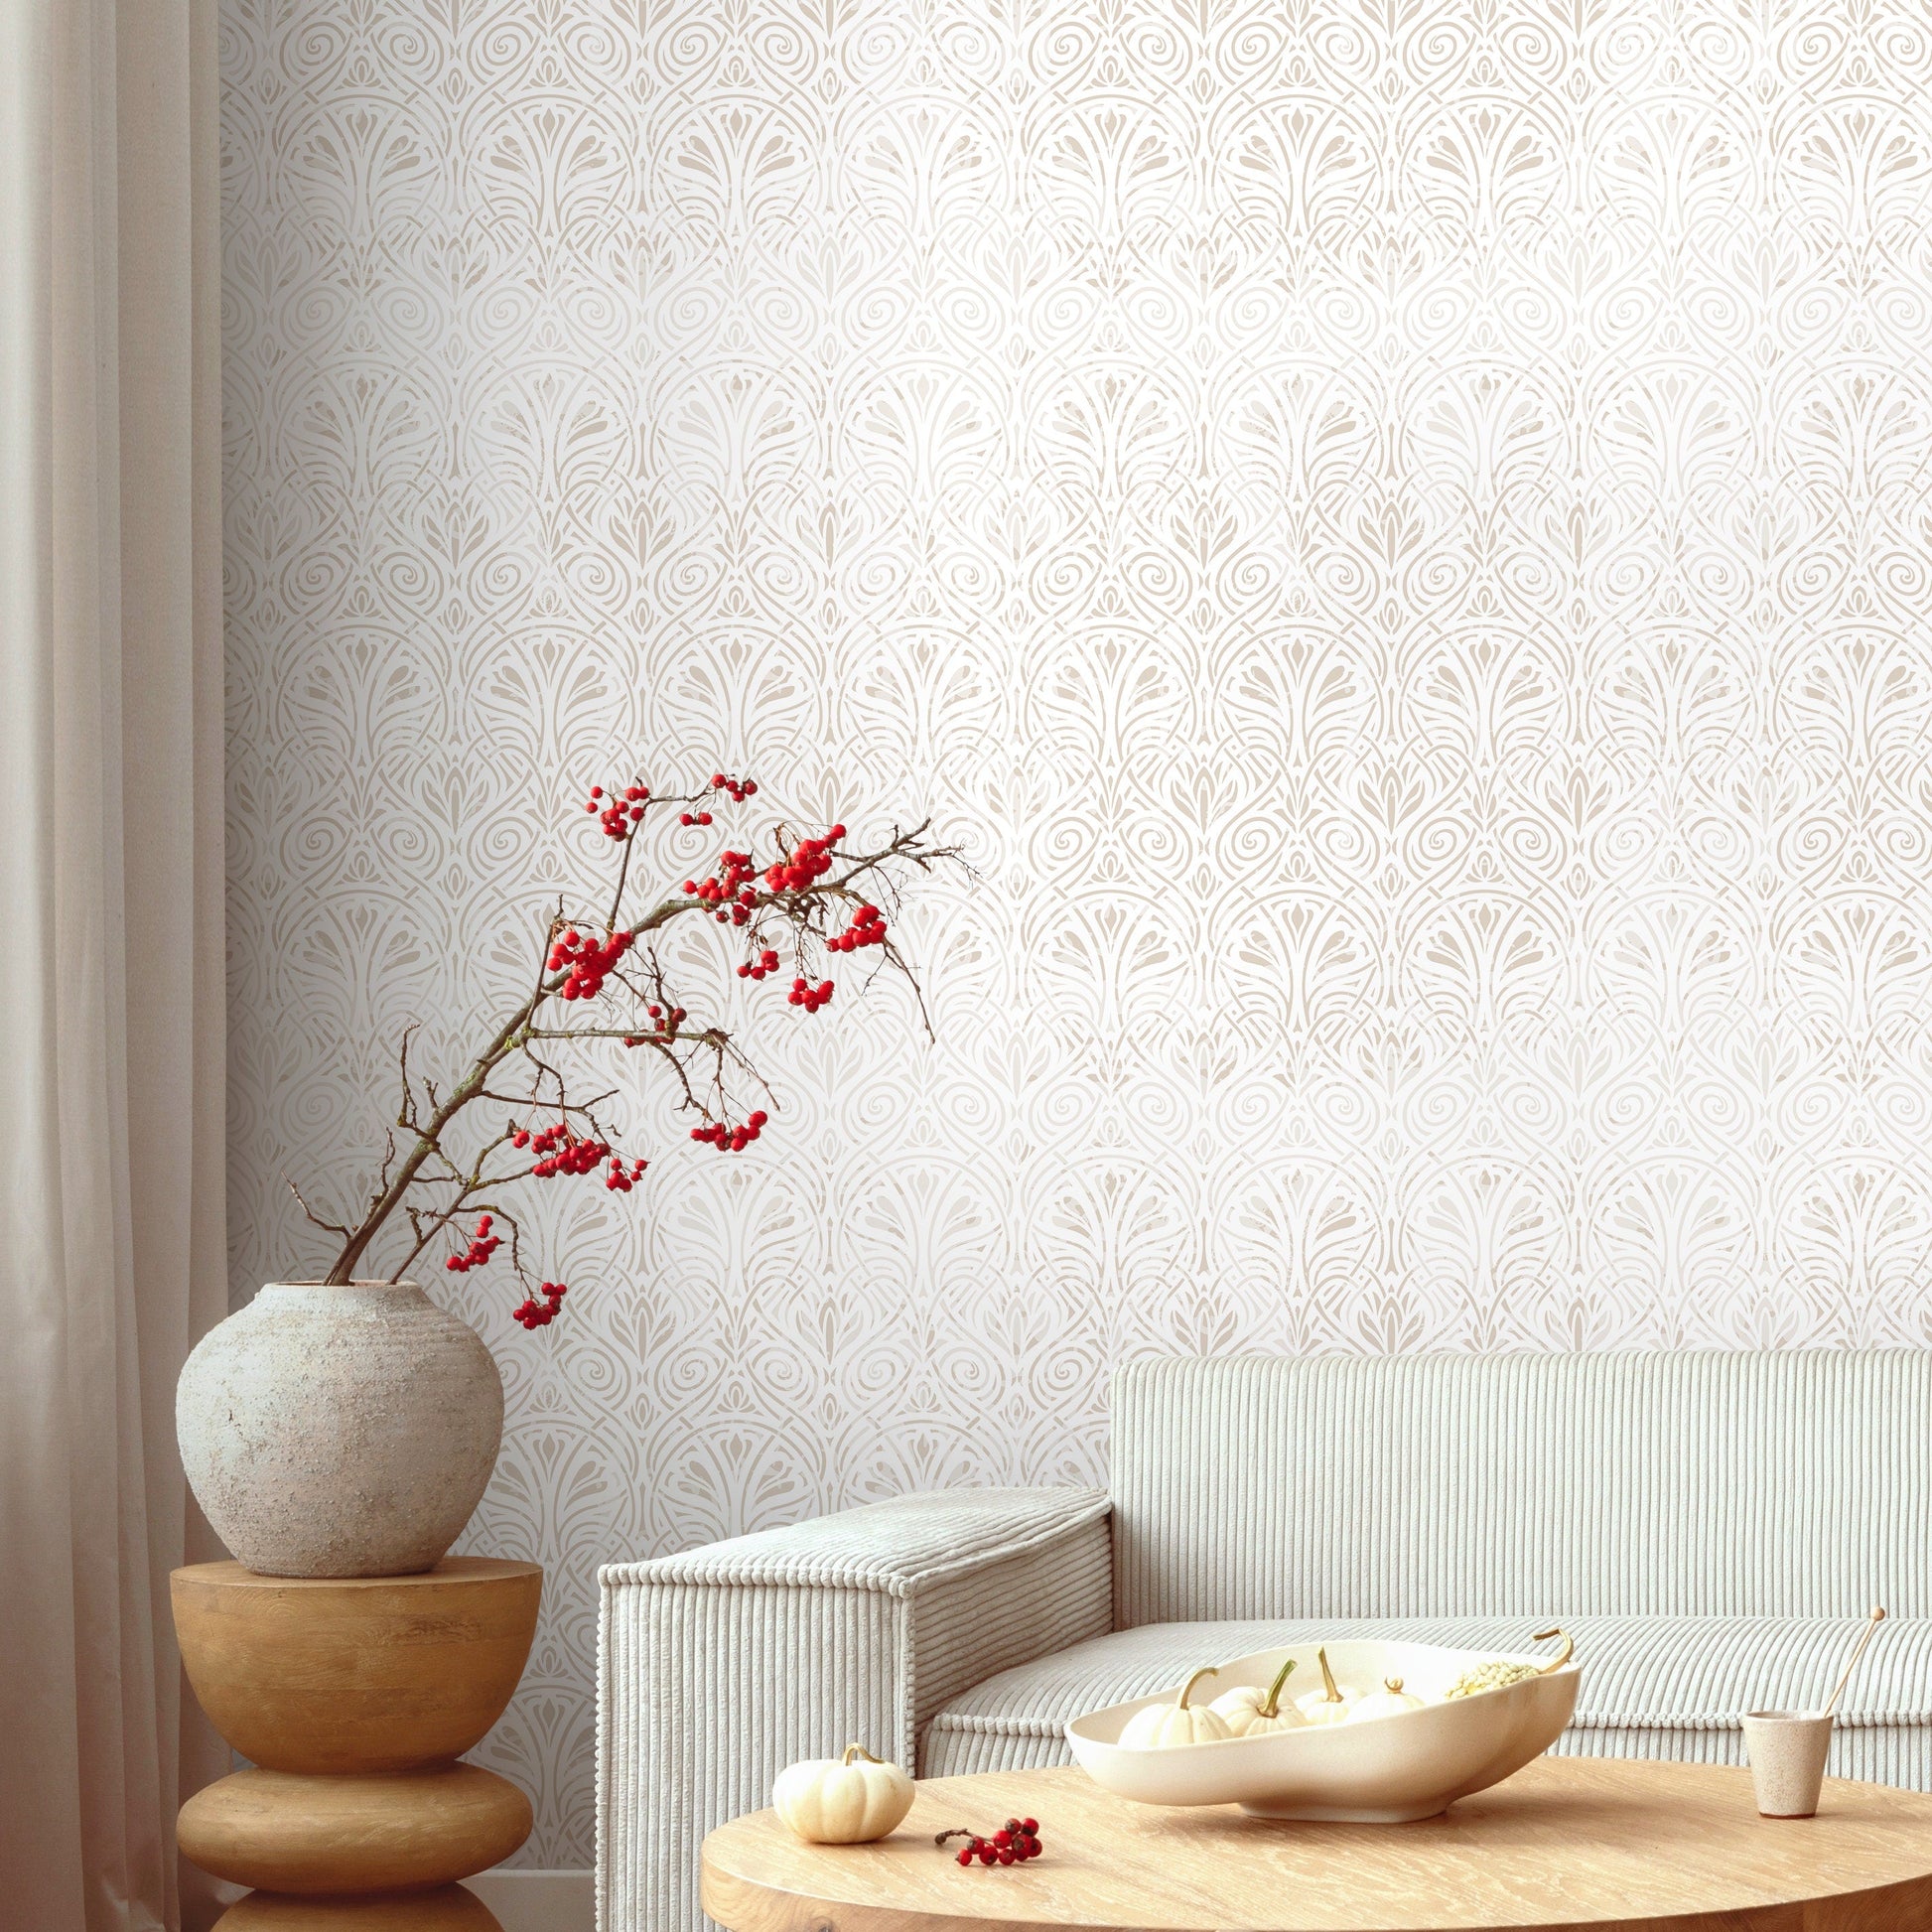 Removable Wallpaper, Scandinavian Wallpaper, Temporary Wallpaper, Minimalistic Wallpaper, Peel and Stick Wallpaper, Wall Paper, Boho - C240